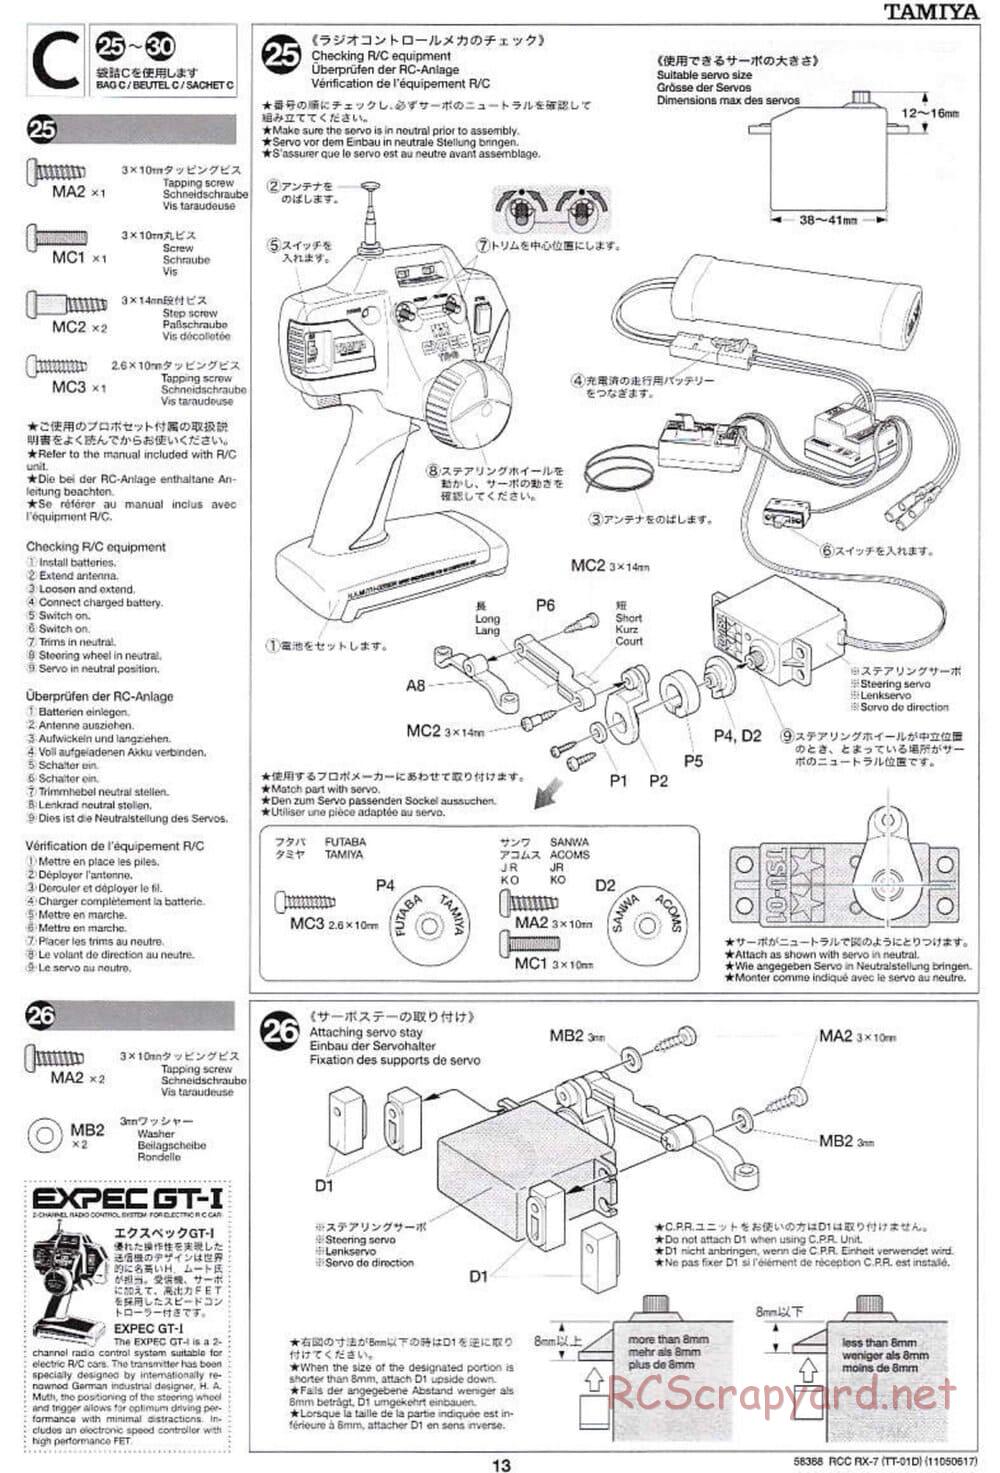 Tamiya - Mazda RX-7 - Drift Spec - TT-01D Chassis - Manual - Page 13